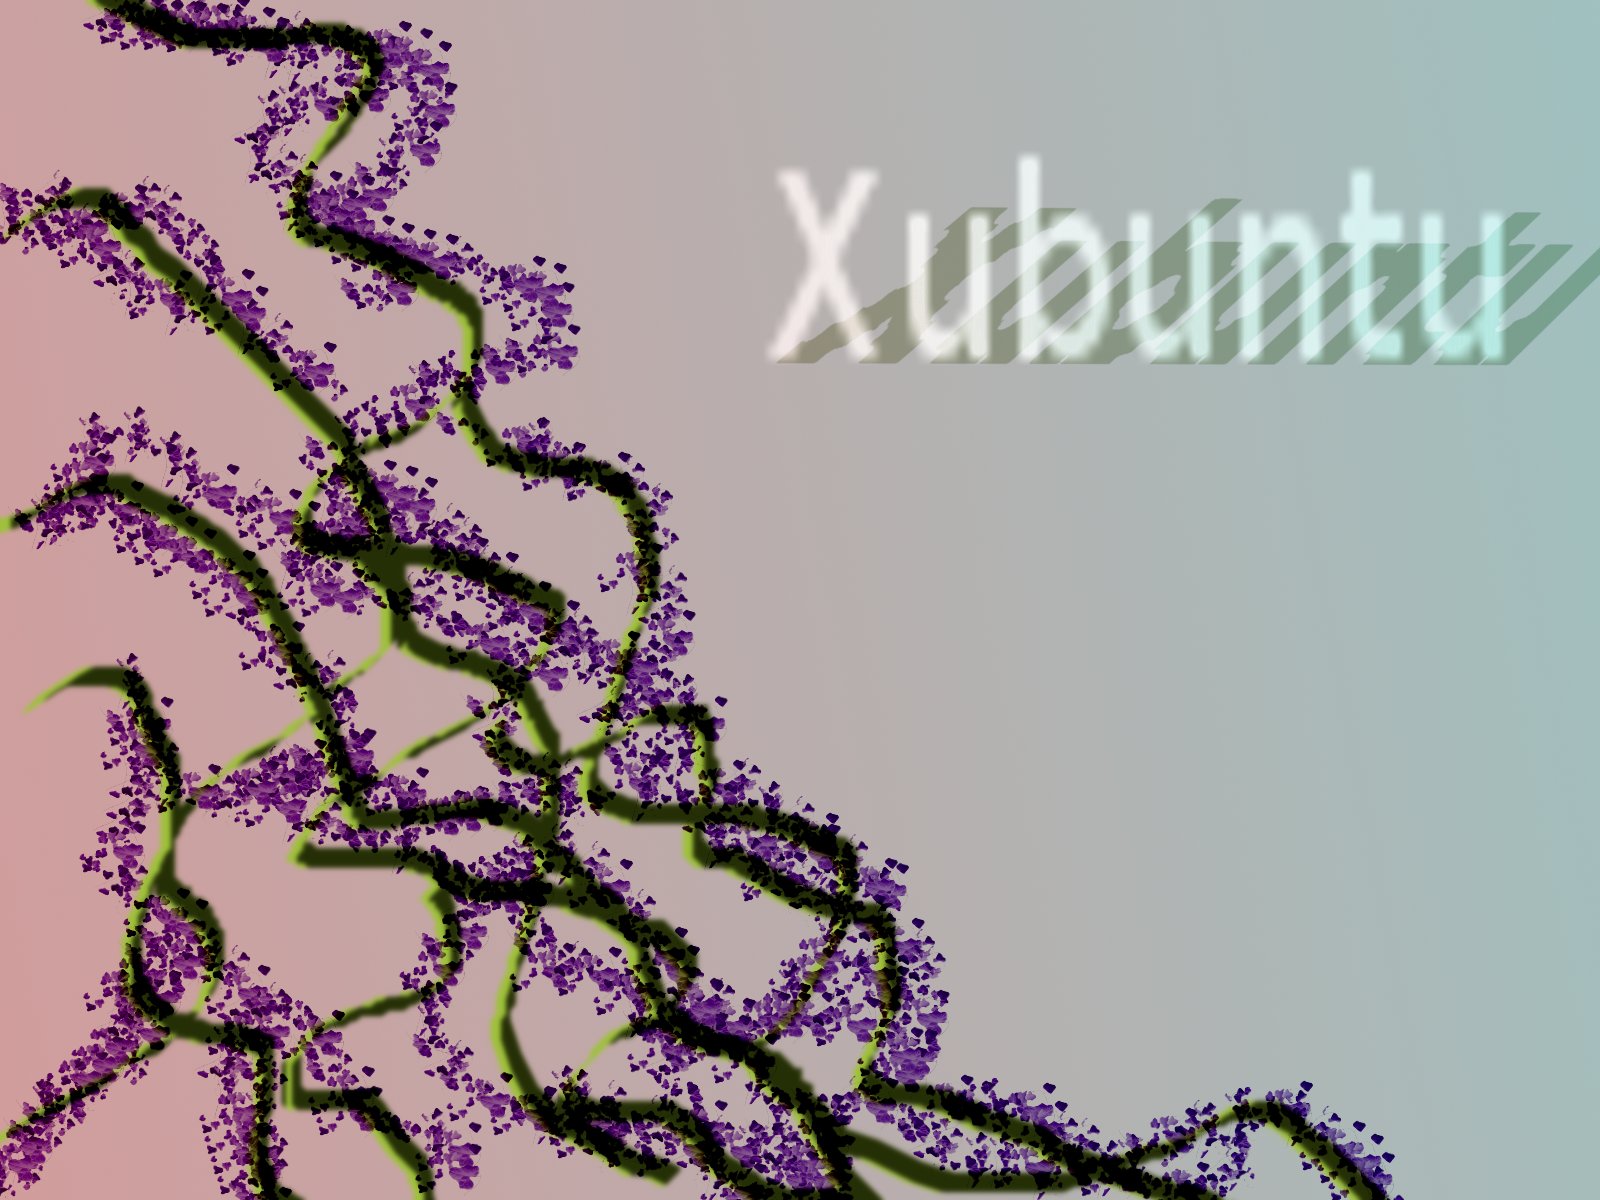 Xubuntu Wallpapers December 23, 2007. Filed under: Ubuntu ARt — godawski 